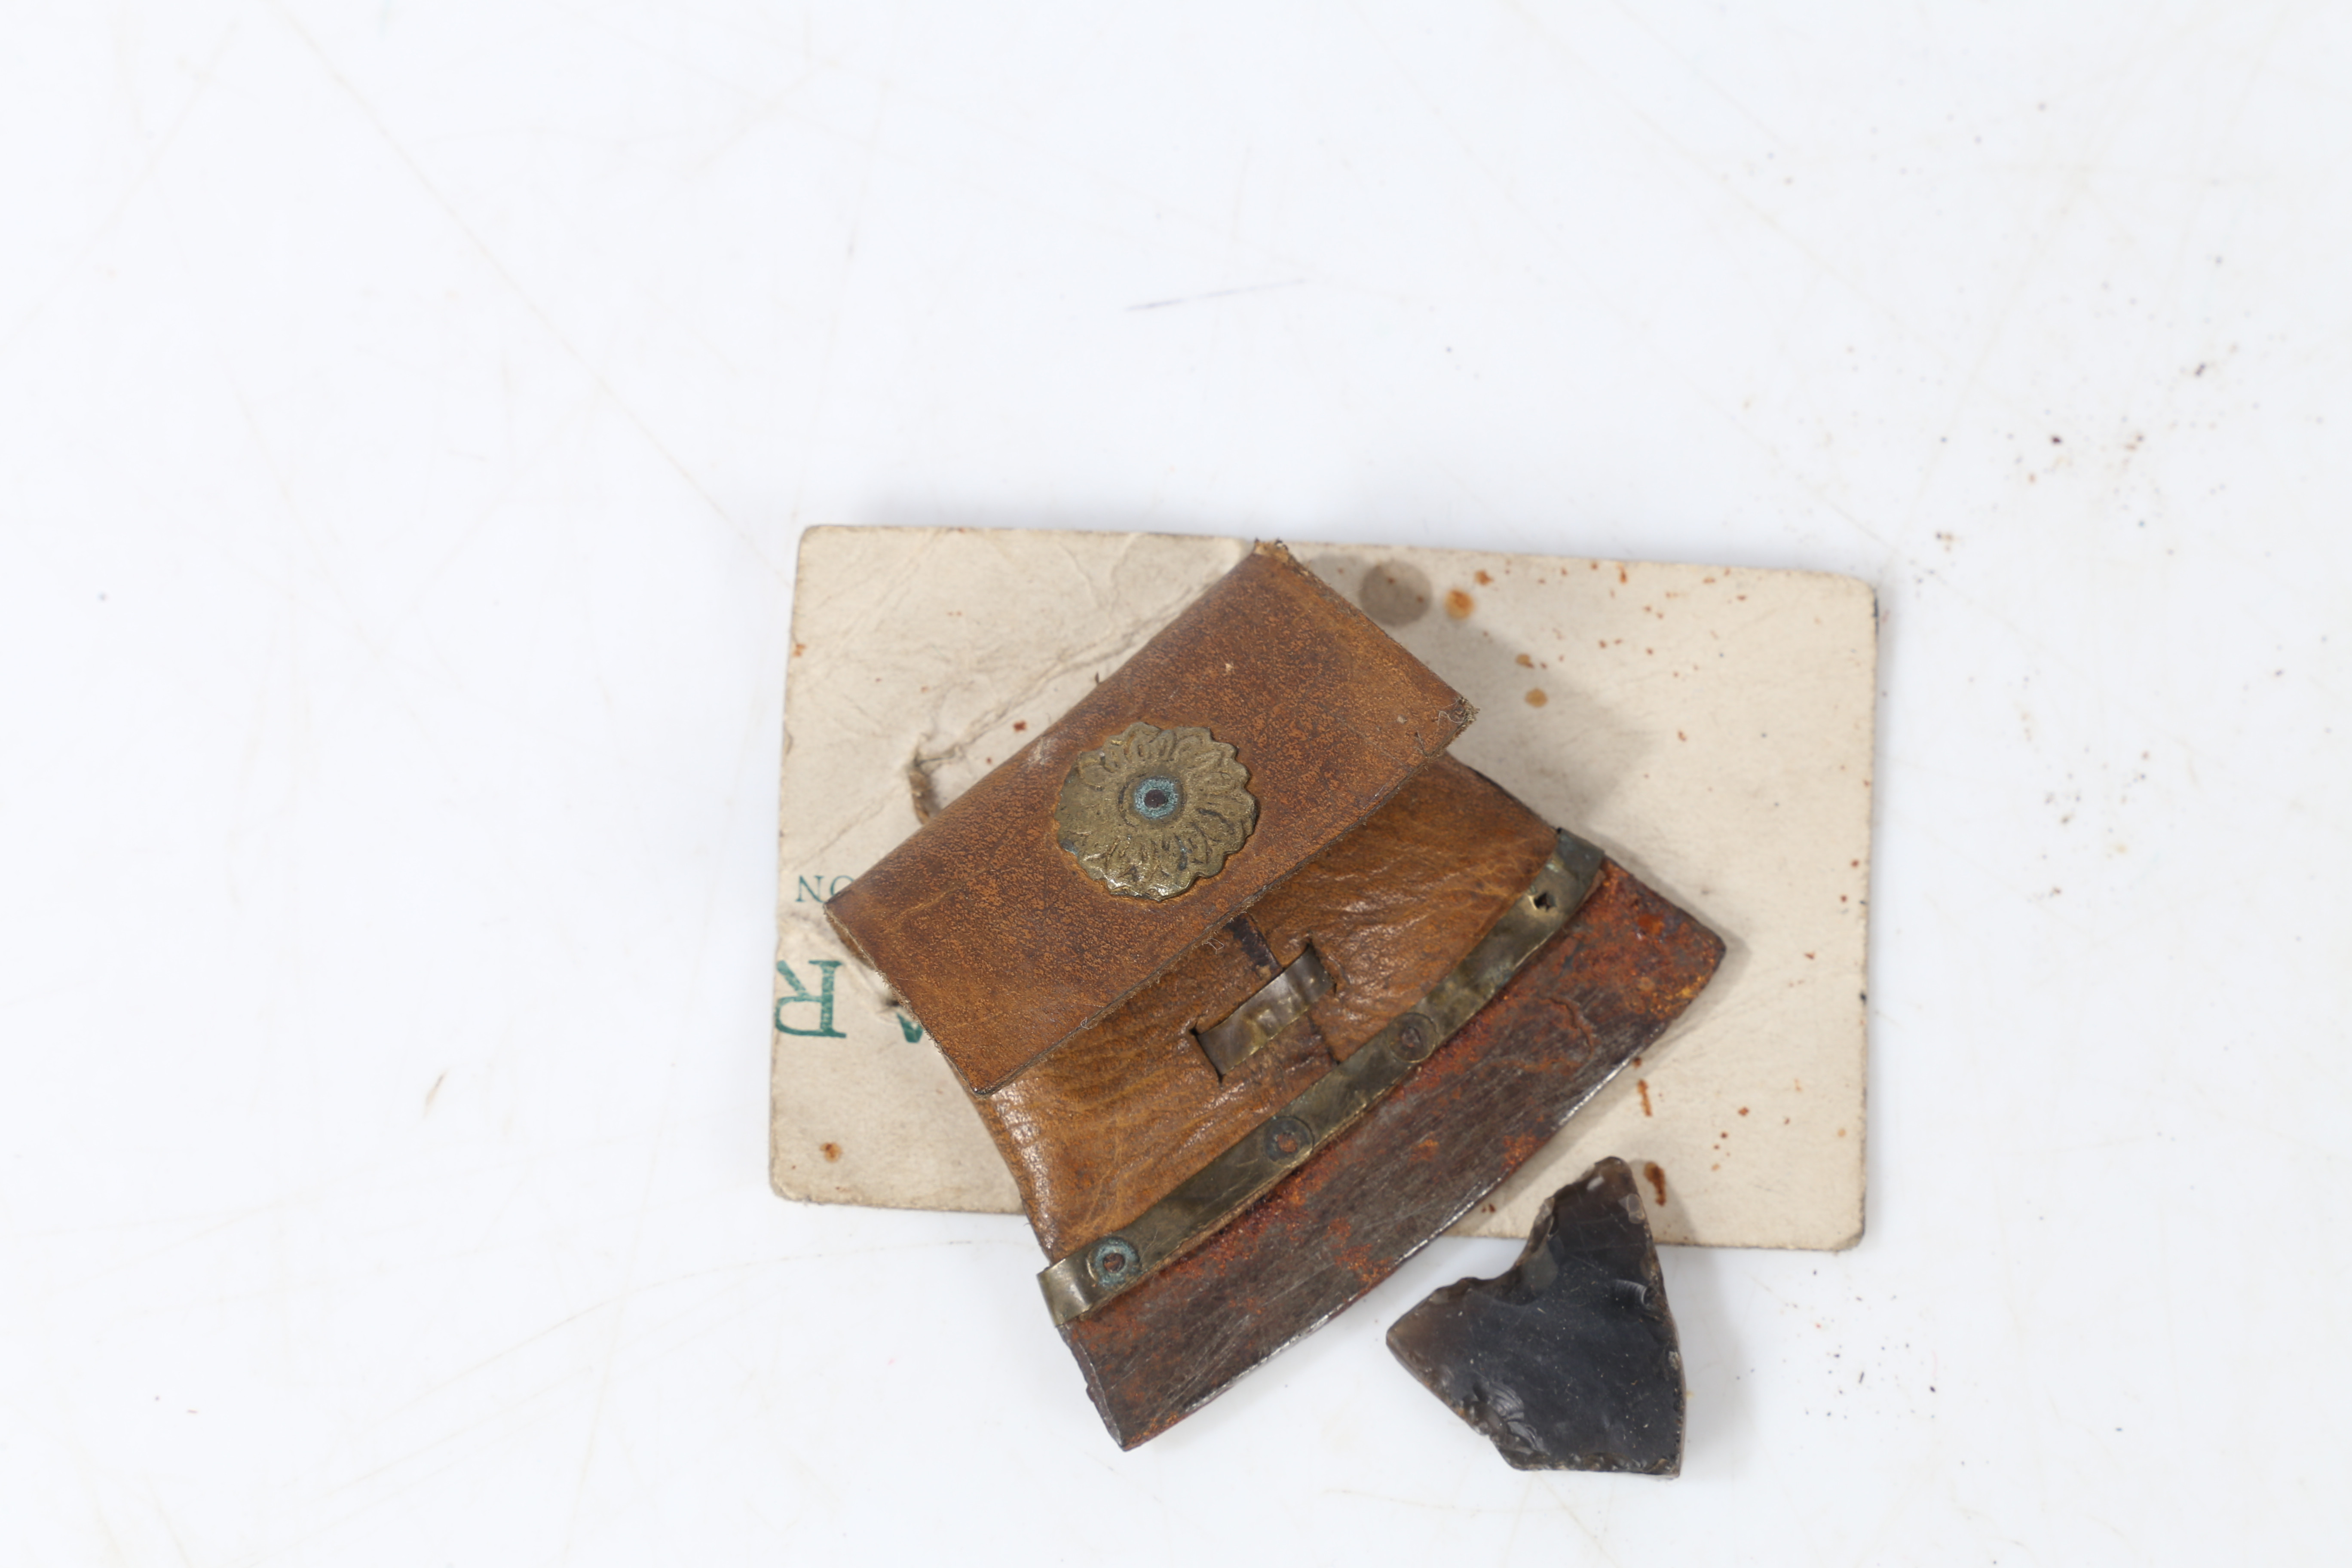 A CIRCA 1816 TIBETAN POCKET FLINT AND STEEL. - Image 2 of 4